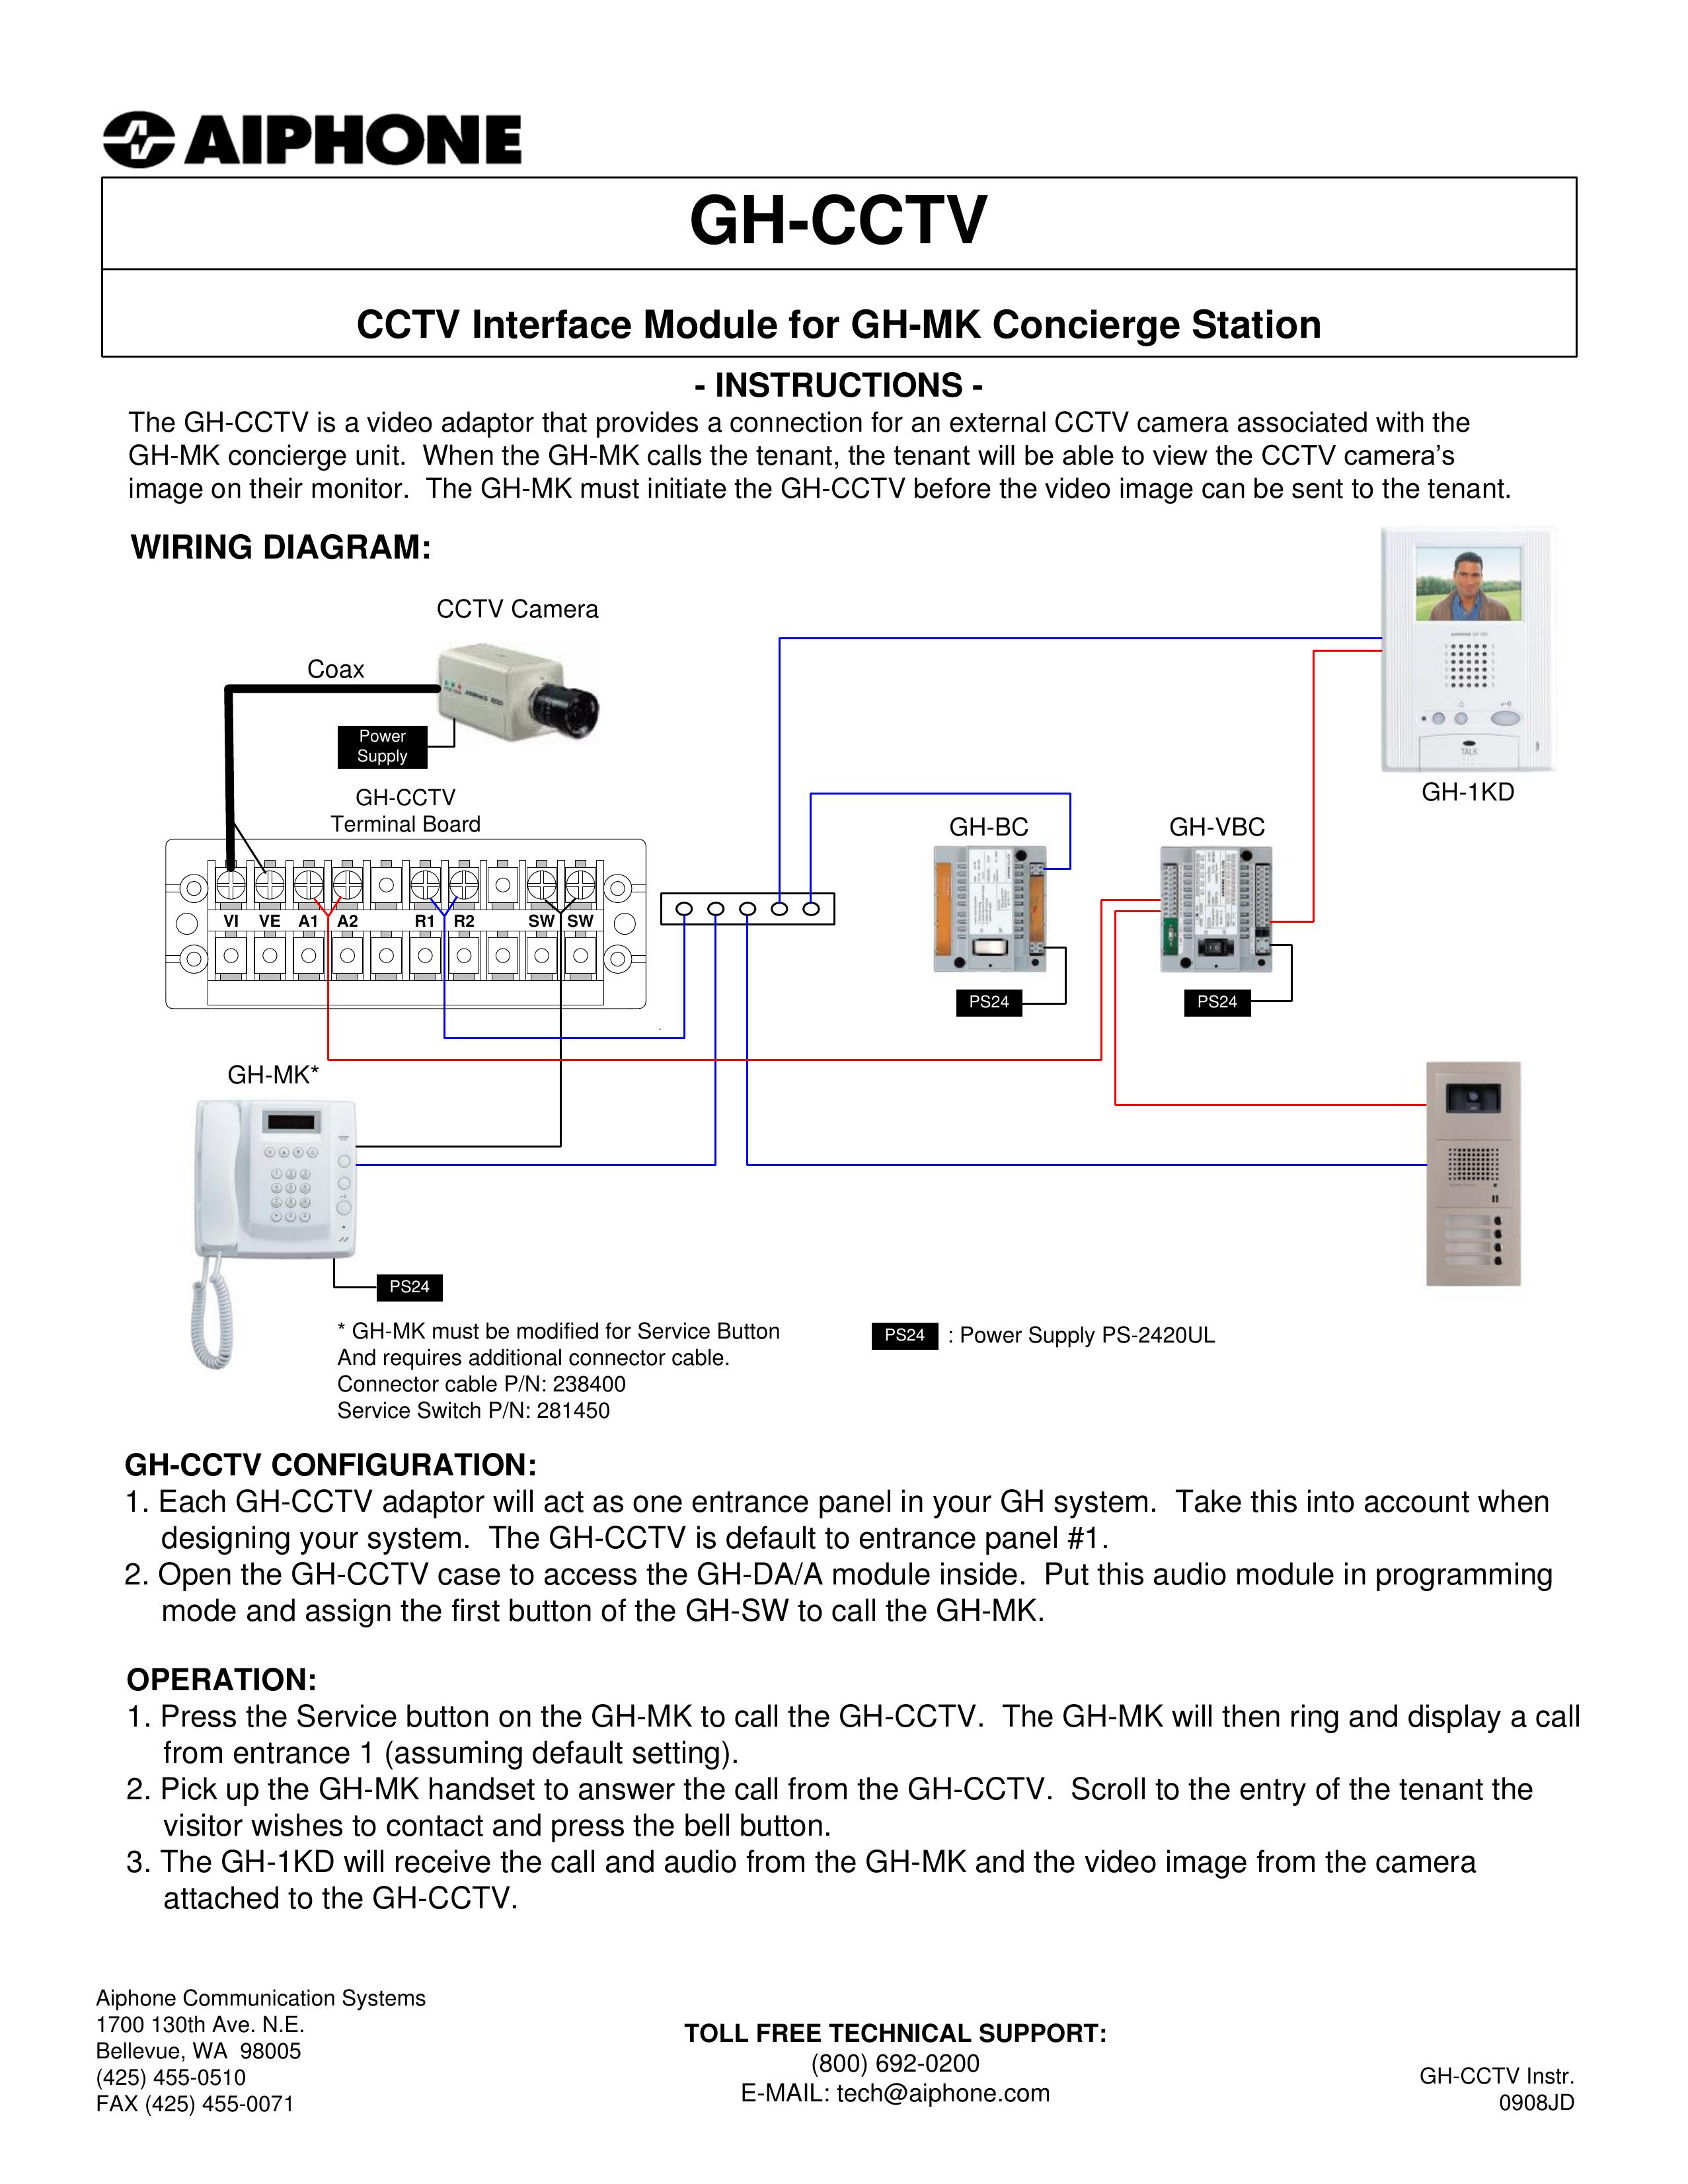 Aiphone GH-CCTV Security Camera User Manual